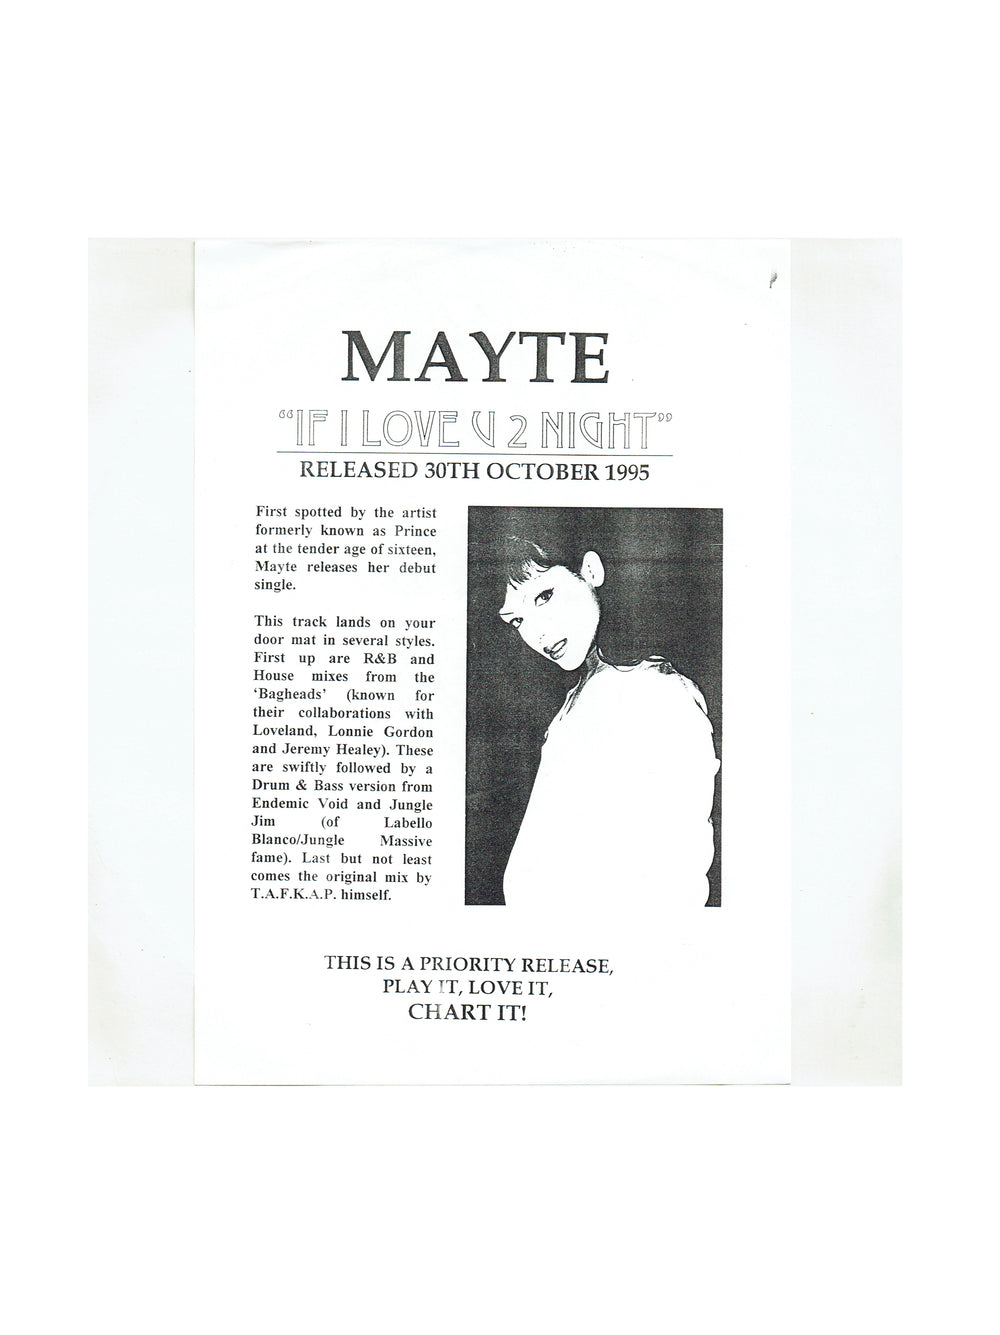 Mayte If I Love U 2 Nite Promotional 12 Inch Vinyl Single 1995 Release Prince DJ Only